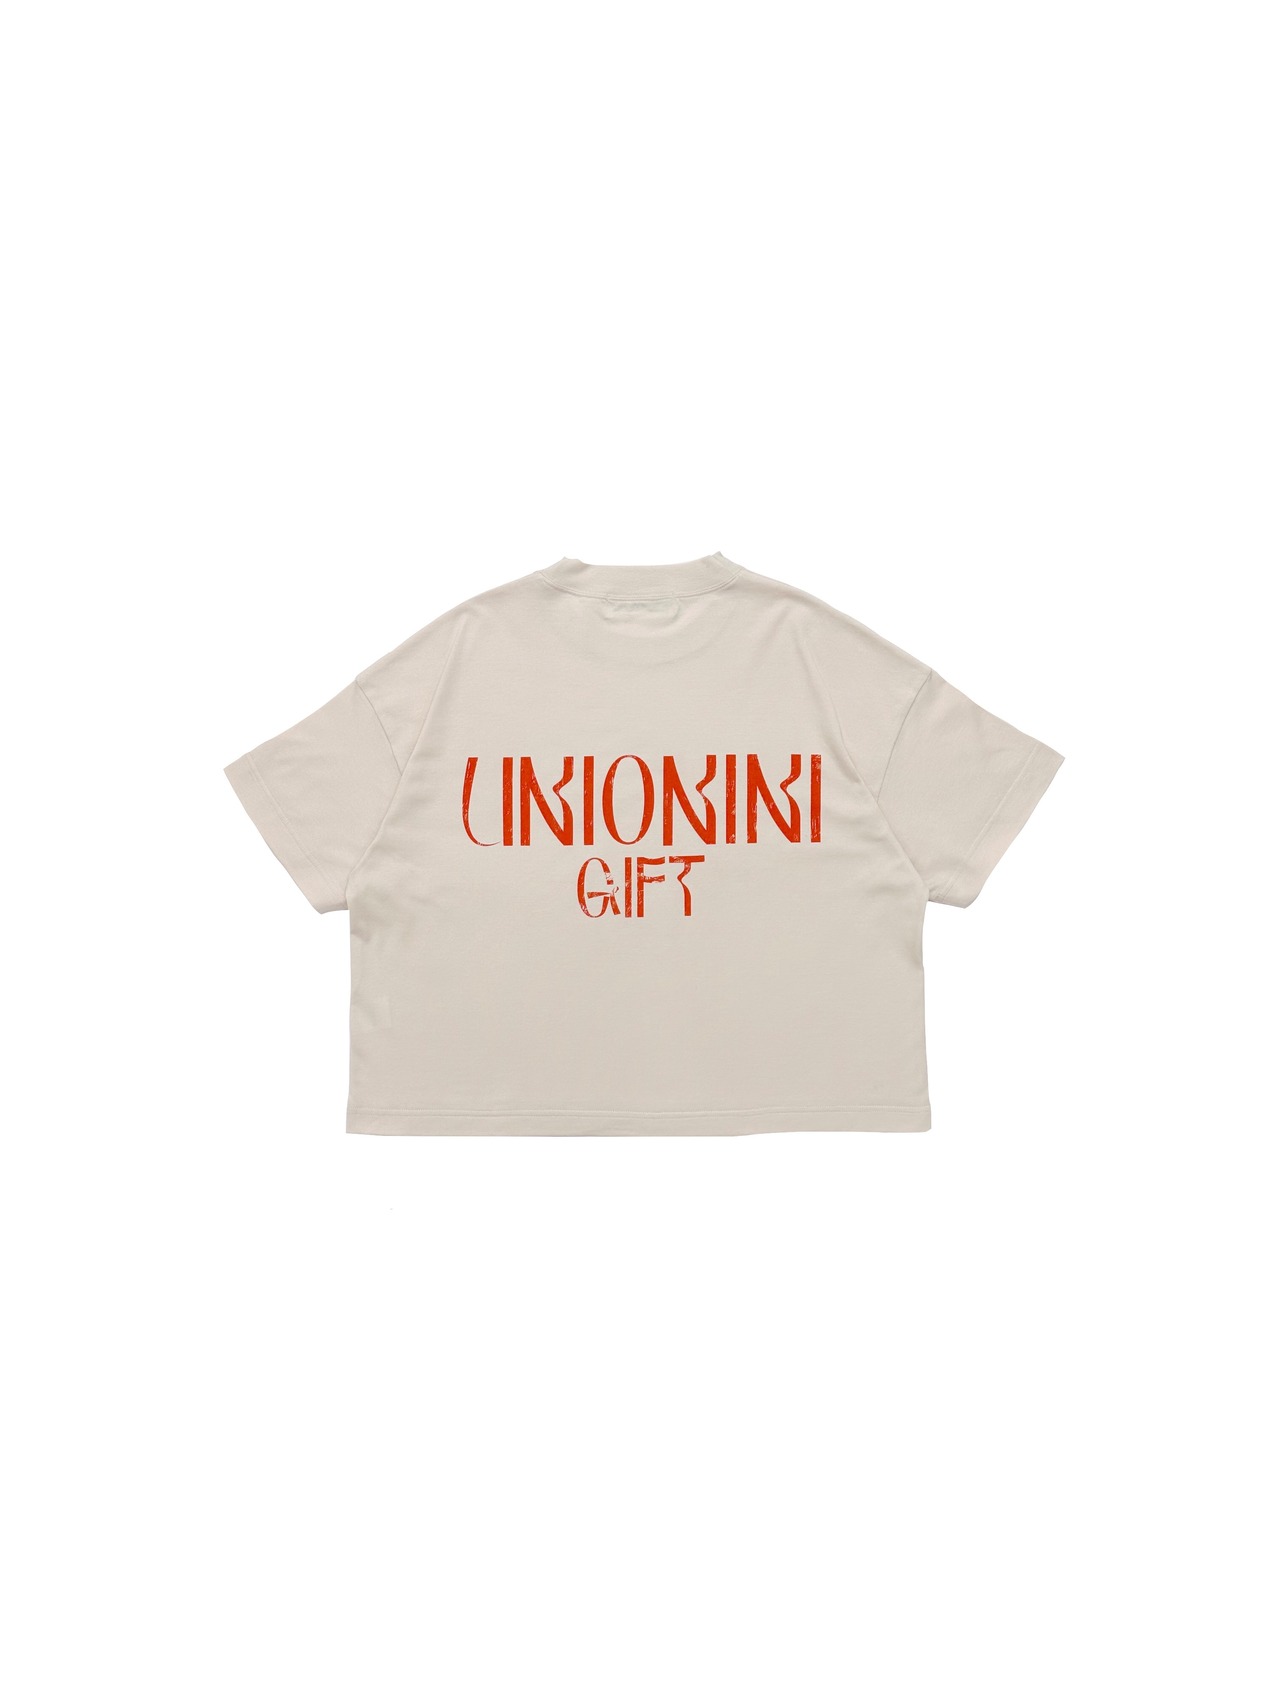 〈 UNIONINI 24SS 〉 teddybear logo big tee "Tシャツ" / Pink Beige / Womens'